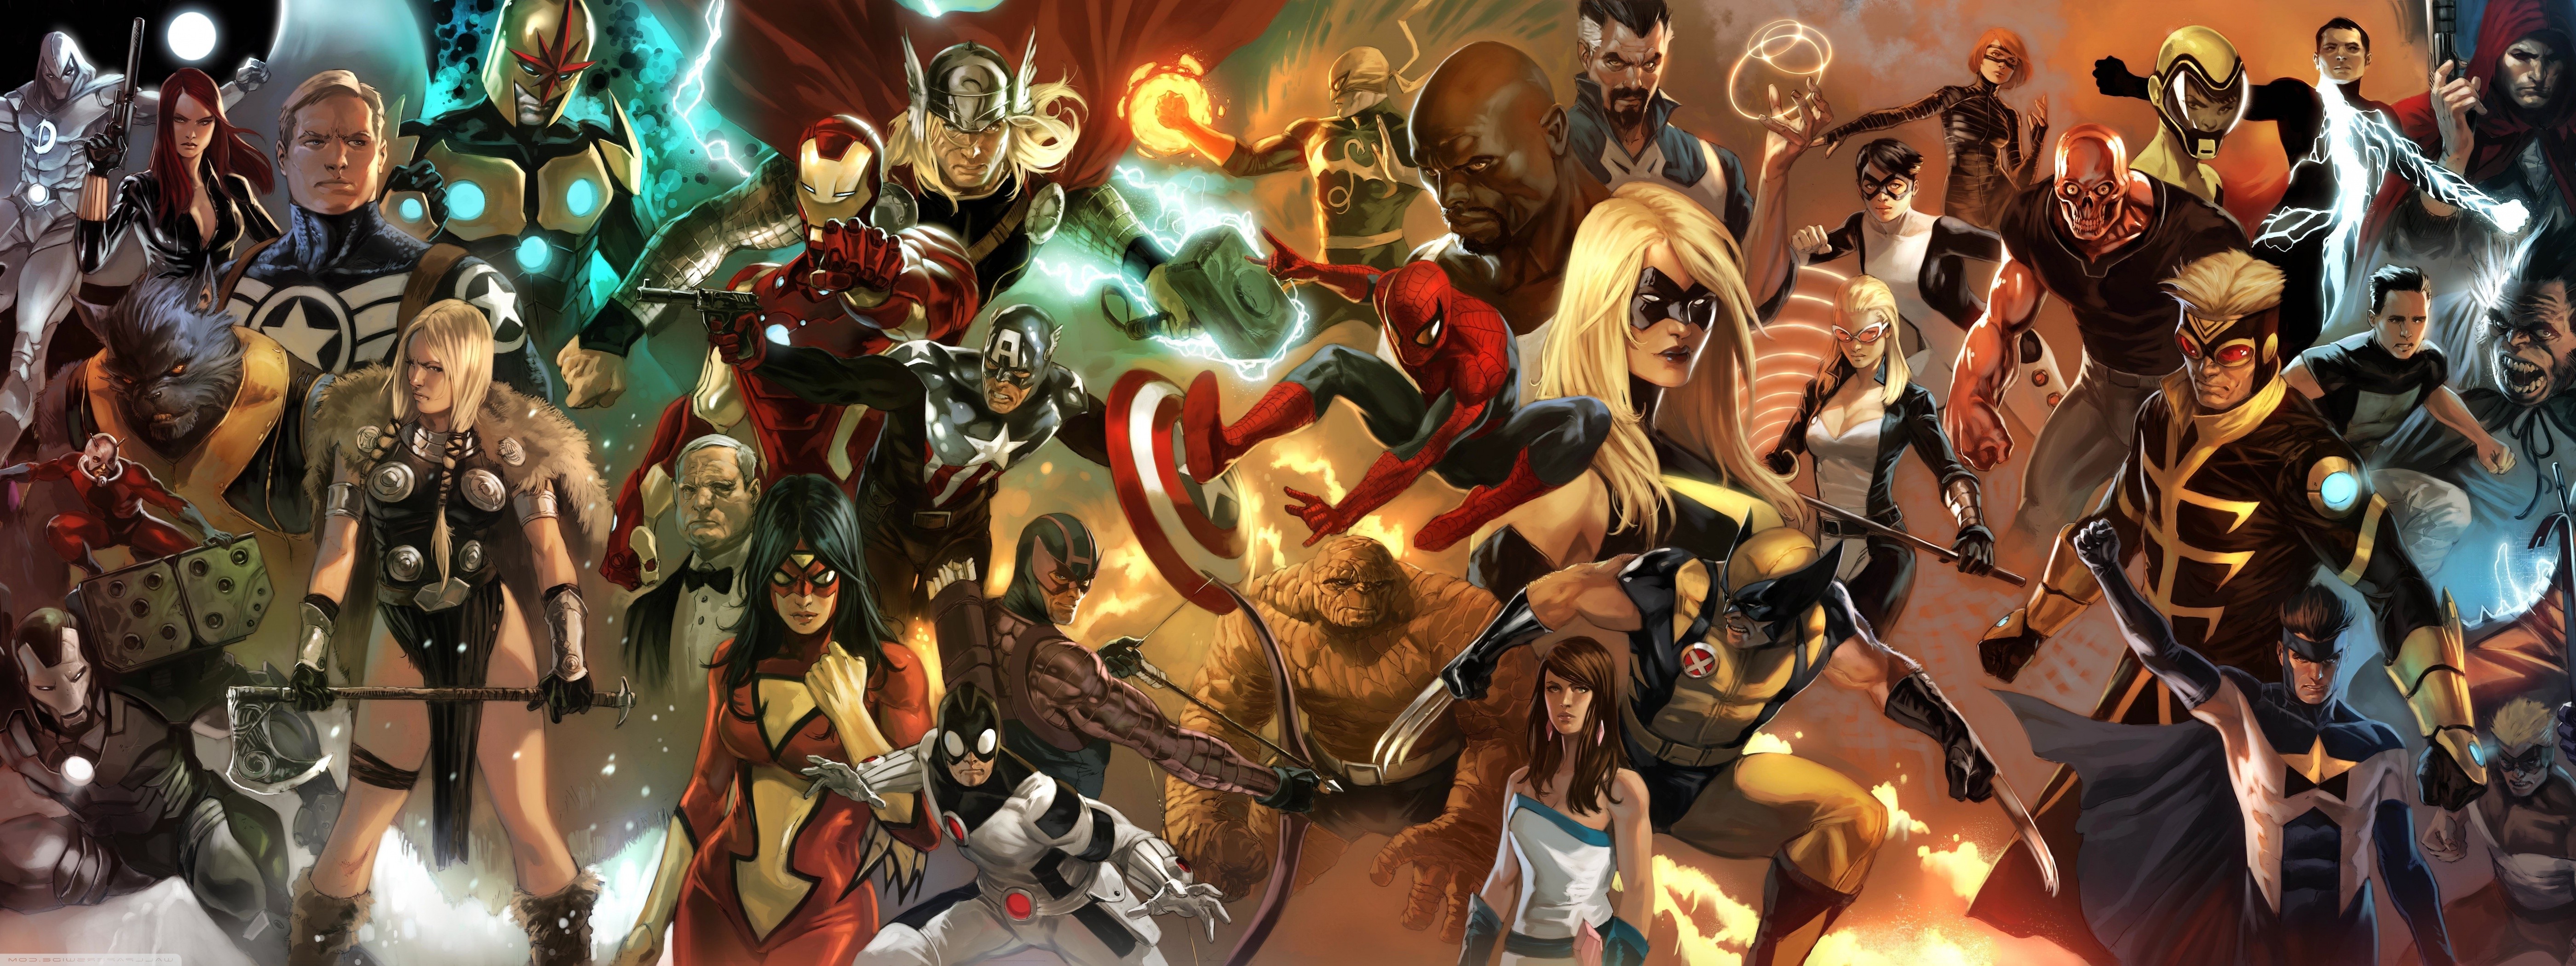 fond d'écran marvel comics hd,dessin animé,personnage fictif,héros,dessin animé,oeuvre de cg